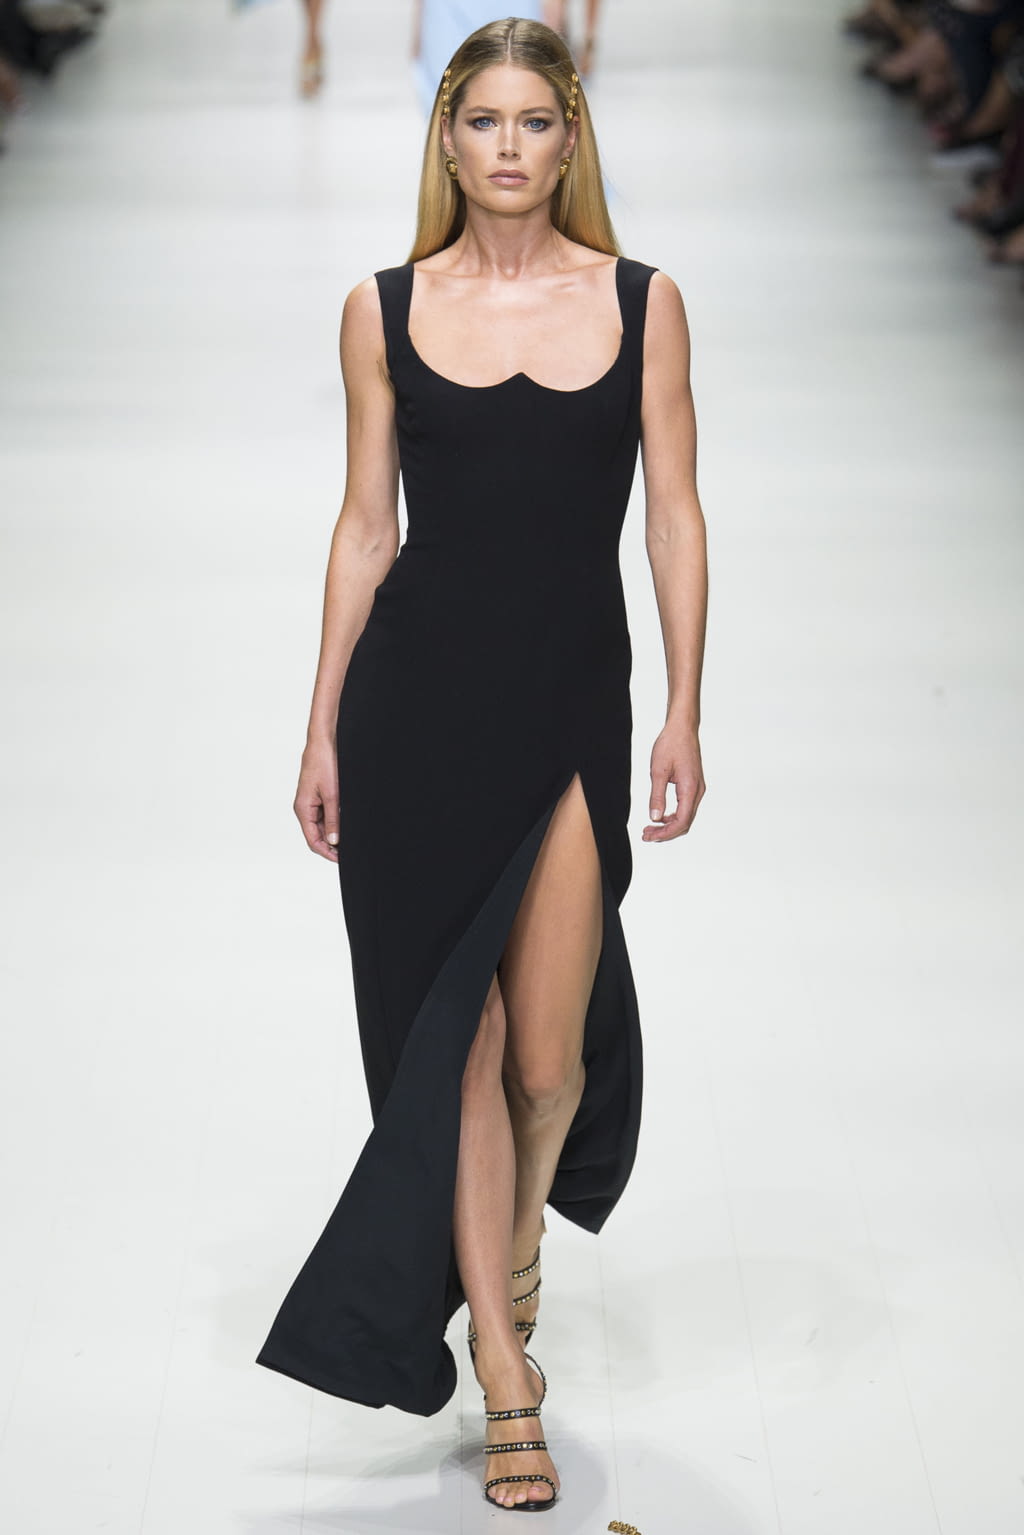 Versace S/S 18 womenswear #31 - Tagwalk: The Fashion Search Engine